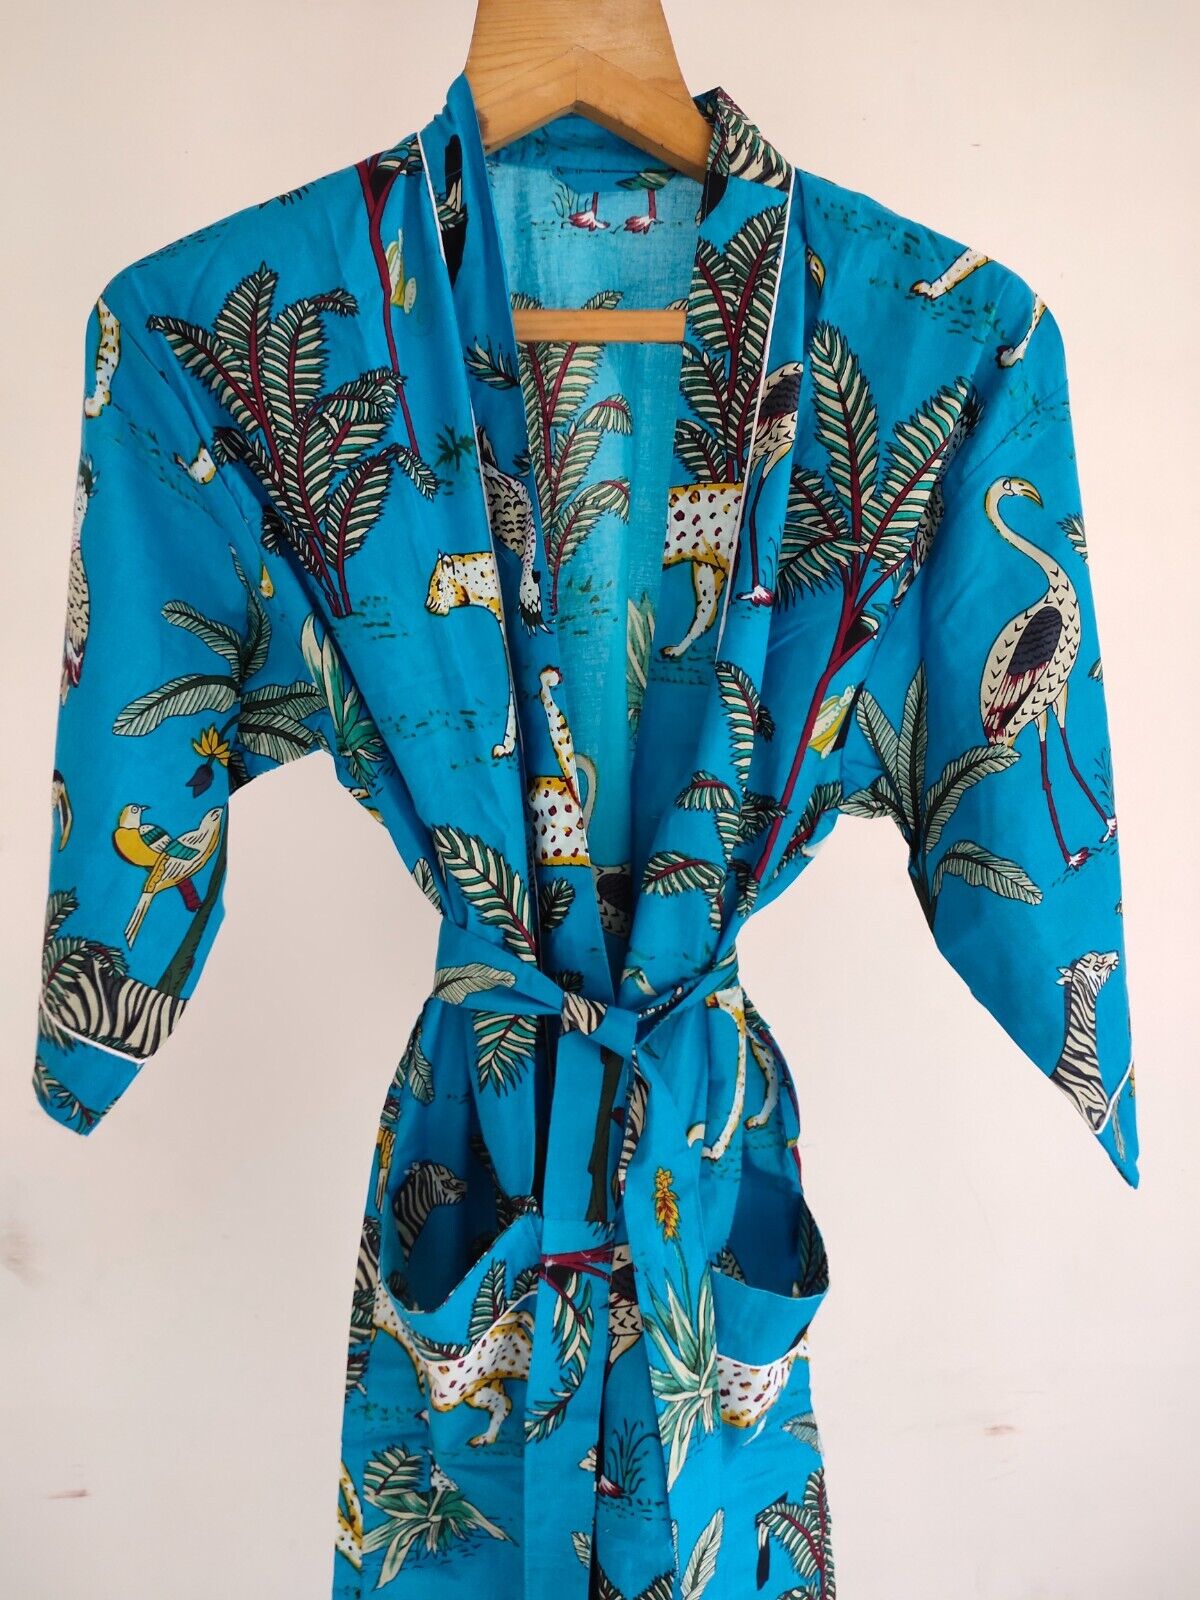 Cotton Blue Womens Long Kimono Robes Hippie Boho Bathrobe Maxi Floral Cotton Nightwear Dress